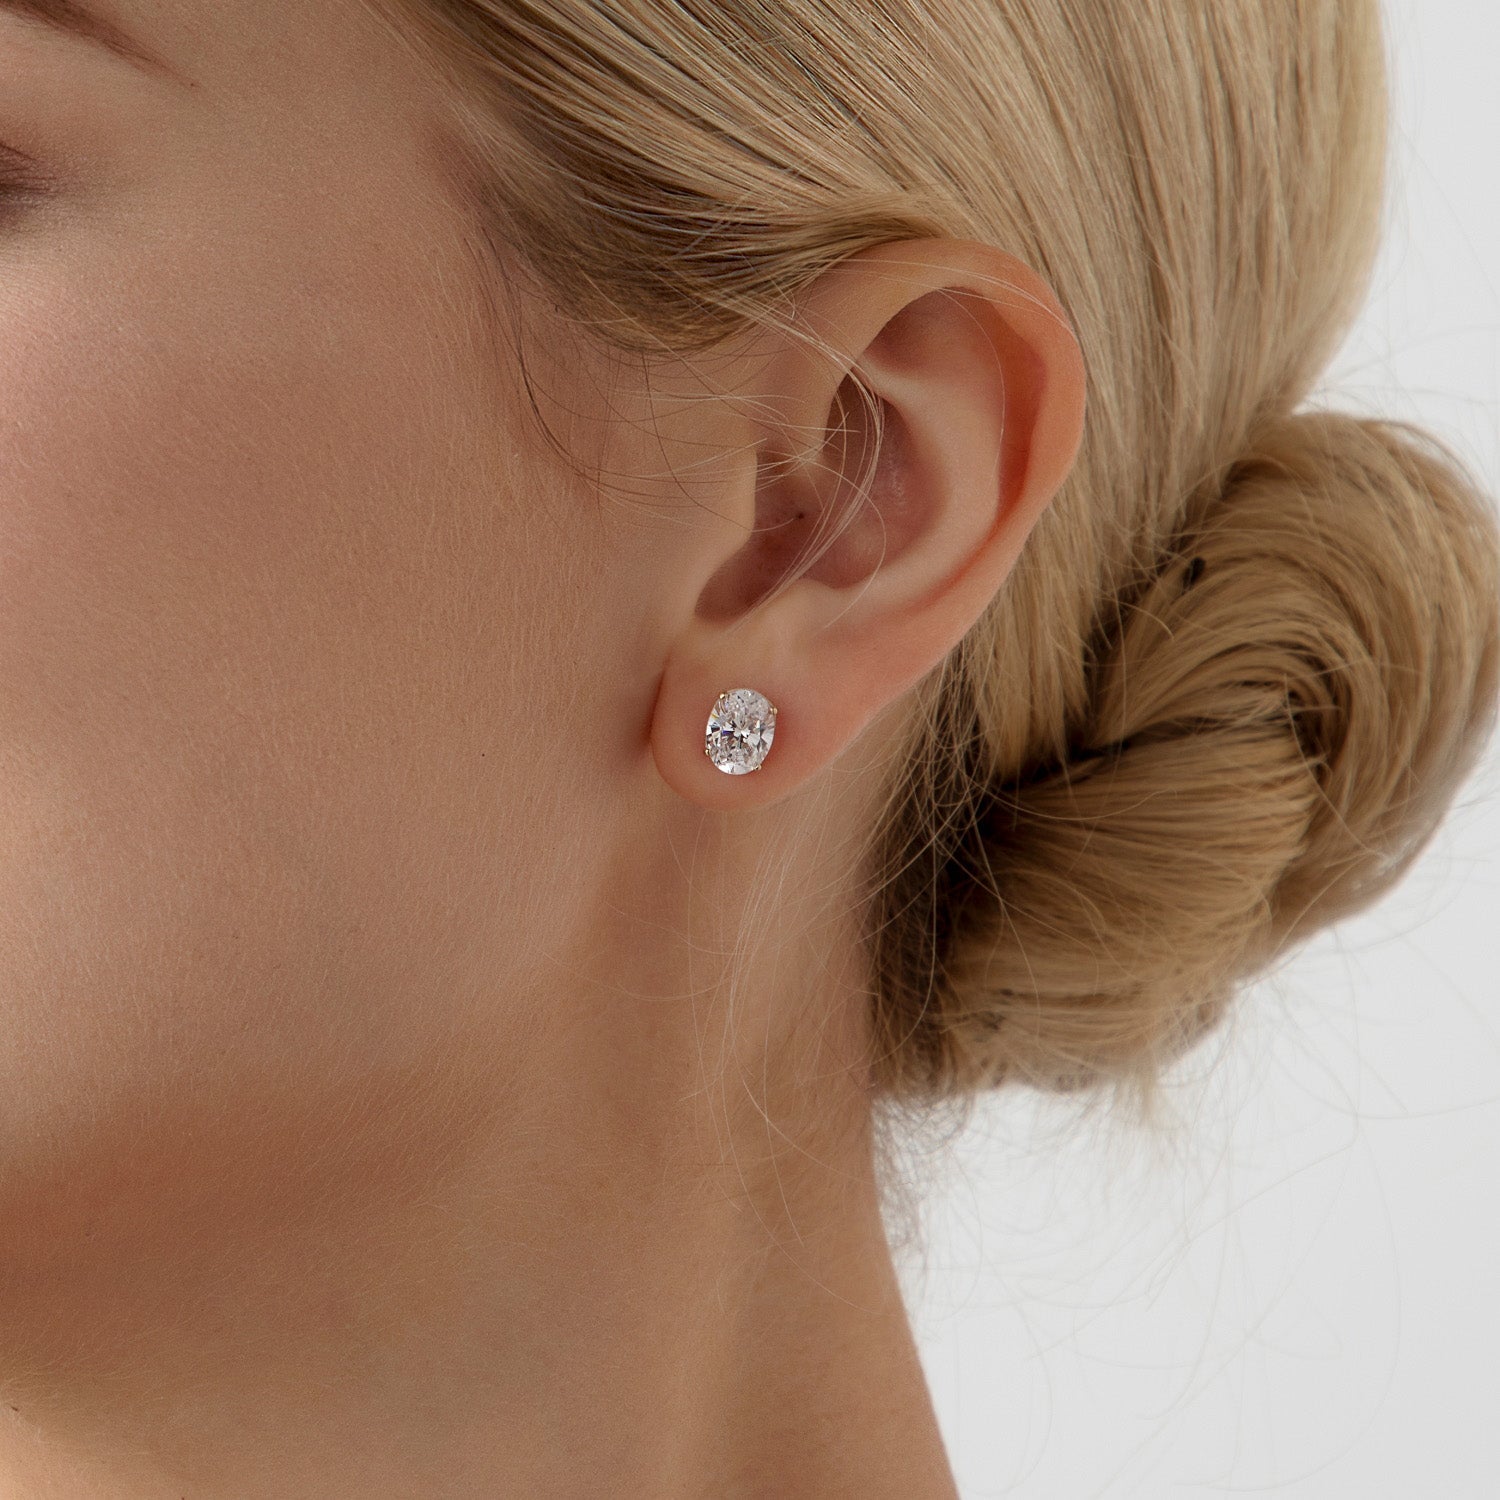 LRC Cz 2 carats total weight stud earringsNWOT | Stud earrings, 2 carat, Cubic  zirconia